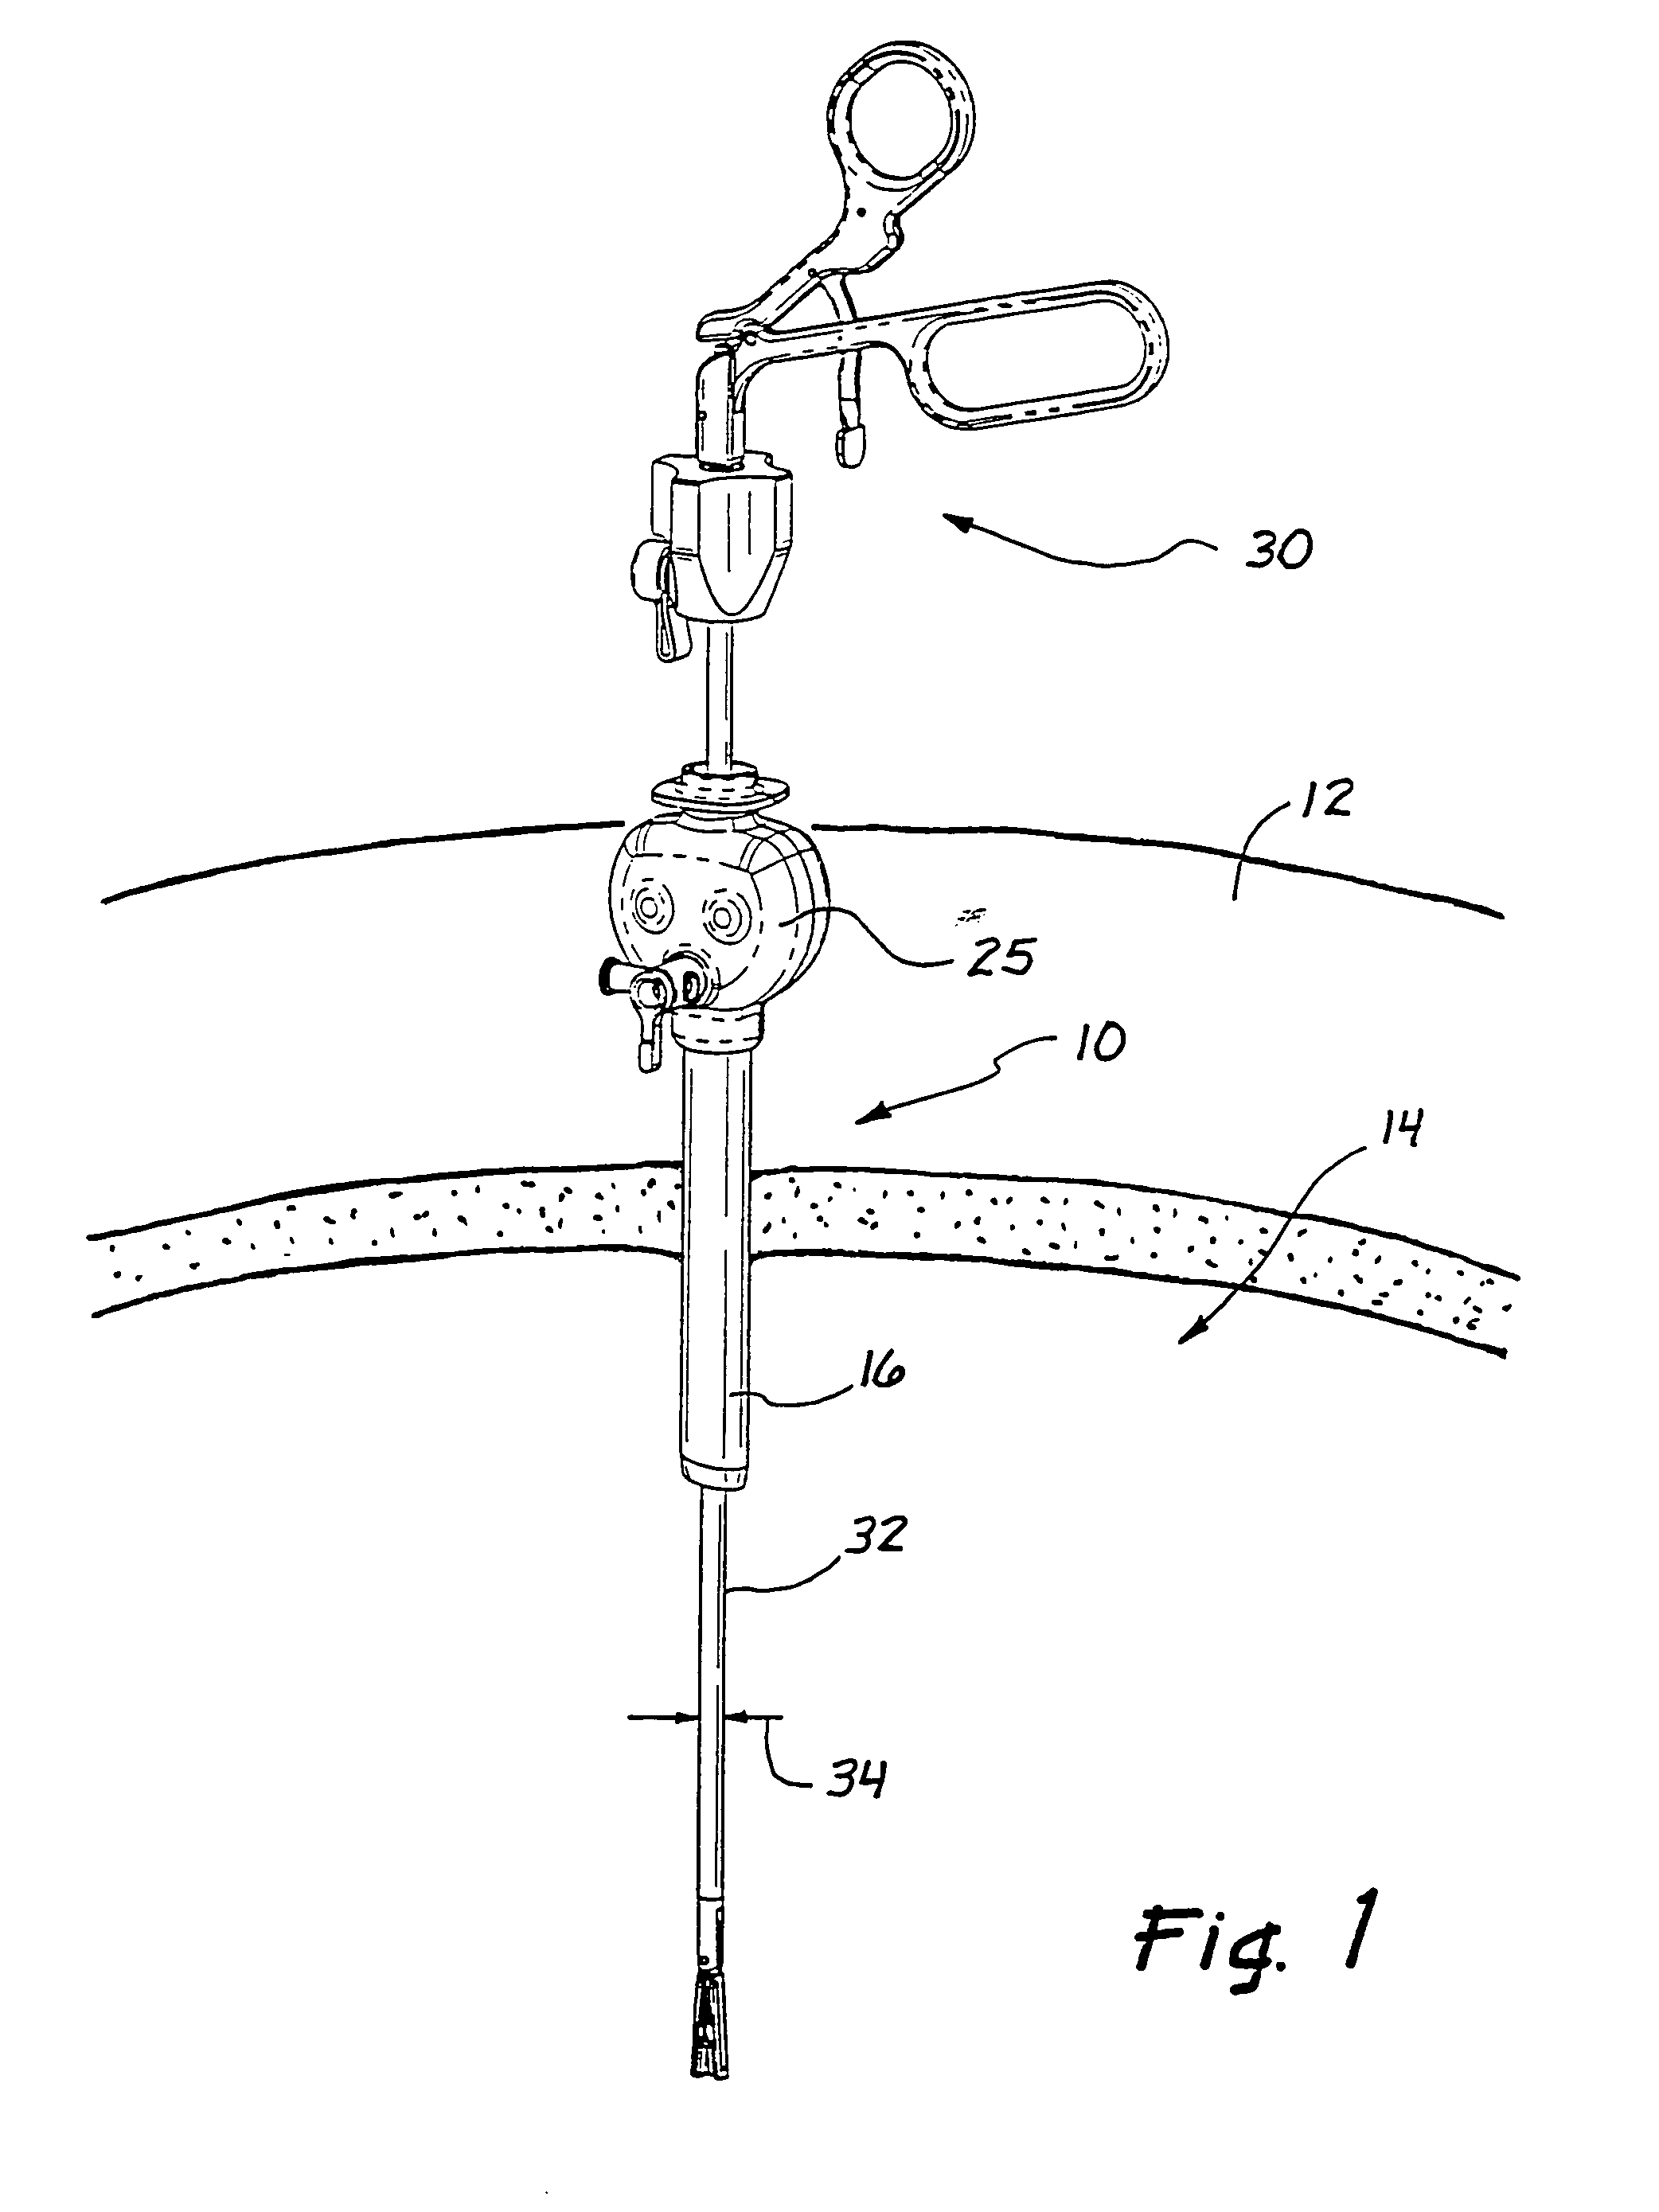 Access sealing apparatus and method